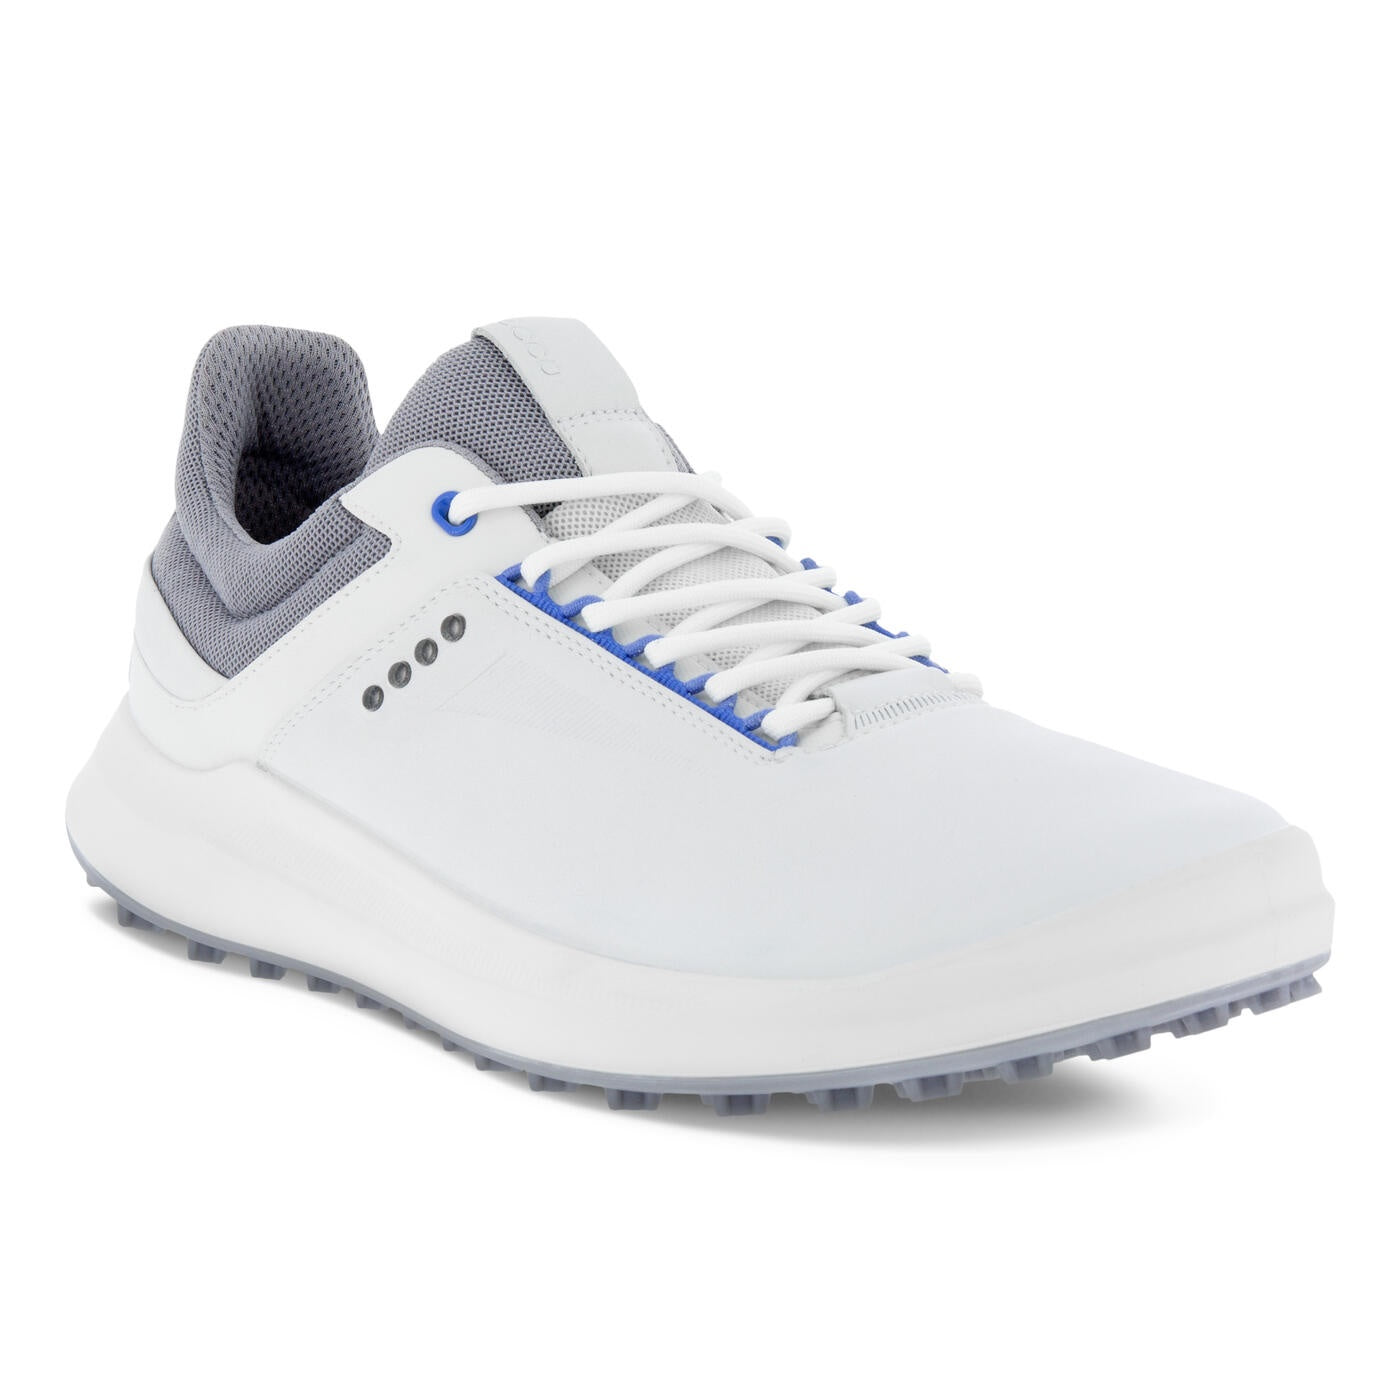 ECCO Golf Core Shoe in White/Shadow White/Silver Grey